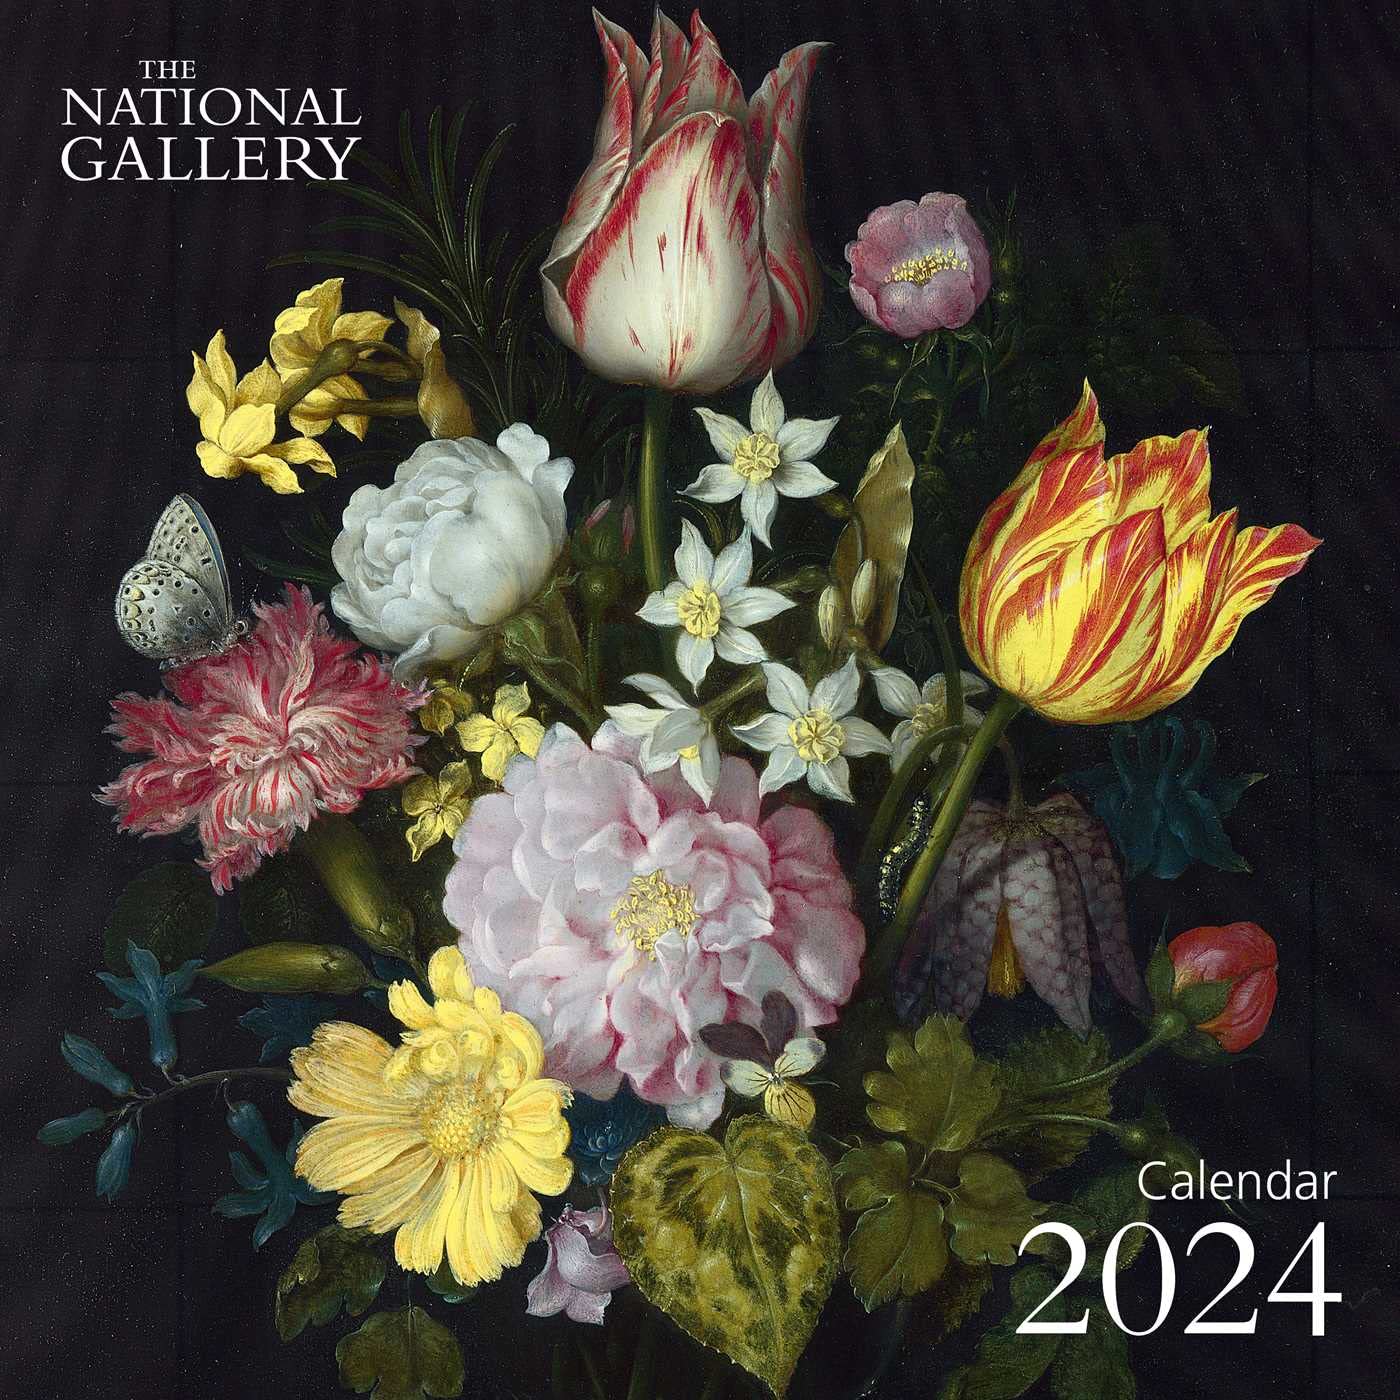 Calendar 2024 - The National Gallery | Flame Tree Studio